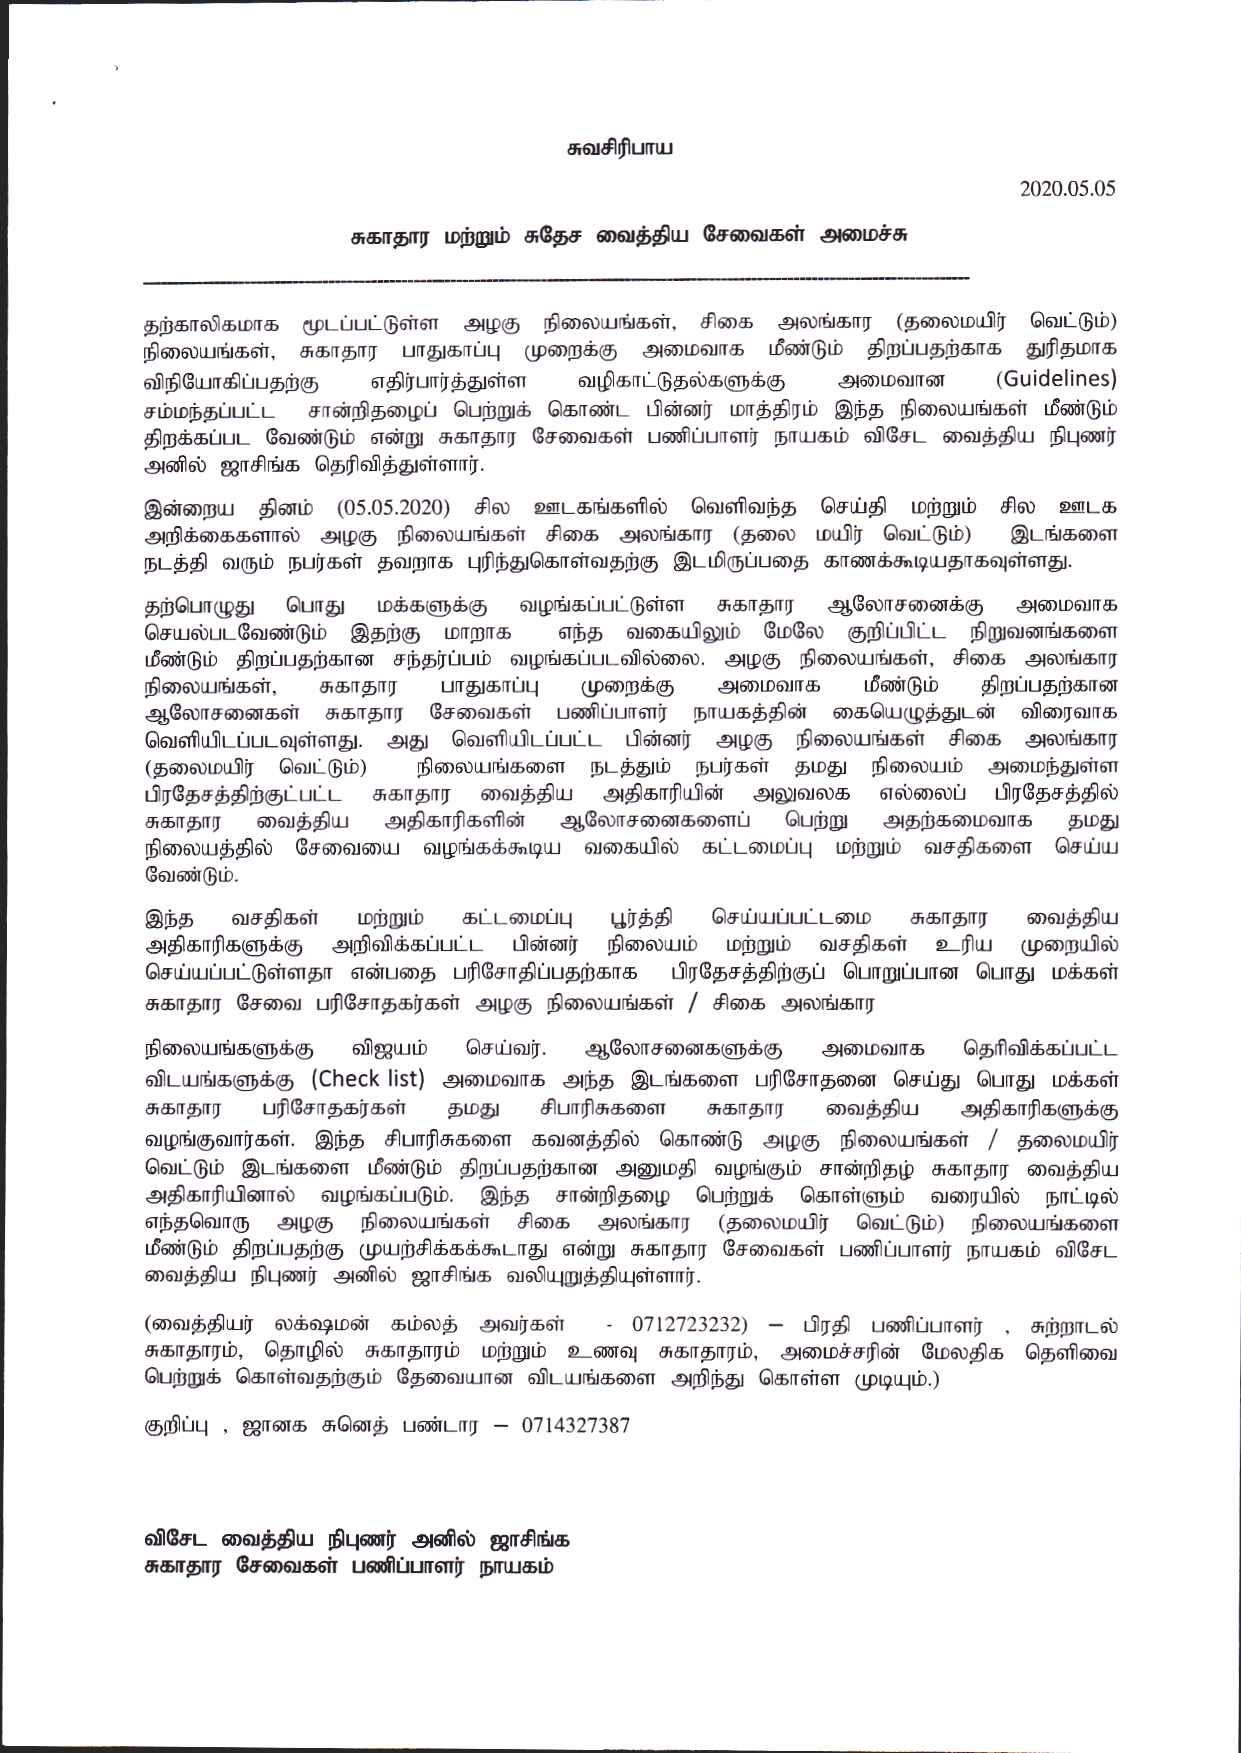 Media Release DGHS Tamil 2 Copy